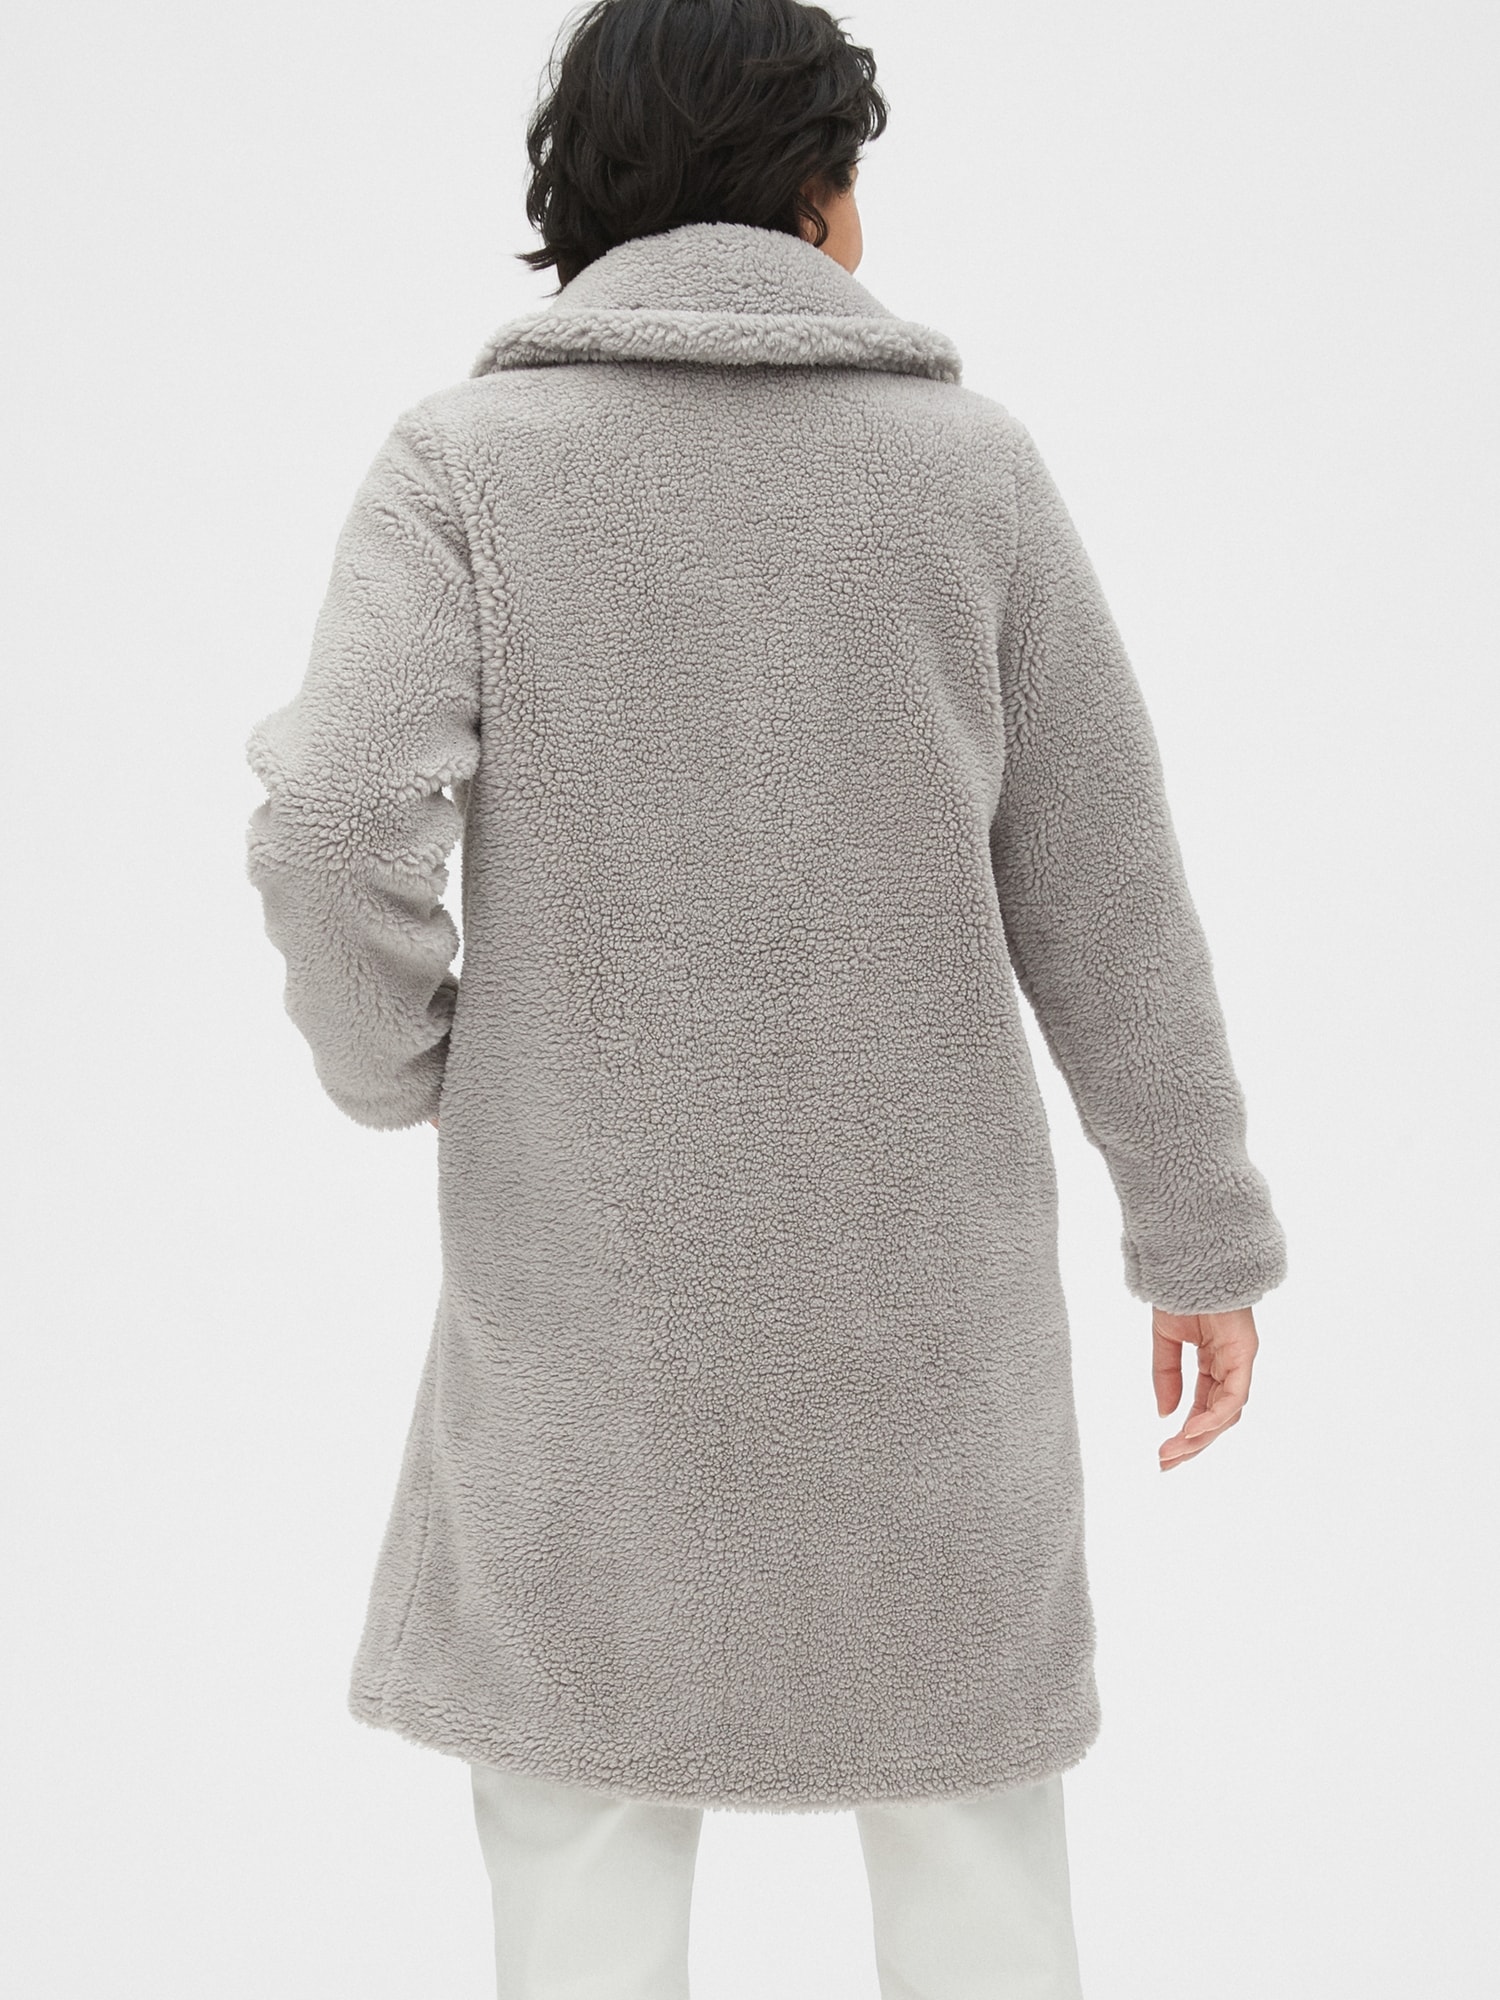 Boden Long Teddy Coat, Charcoal, 8